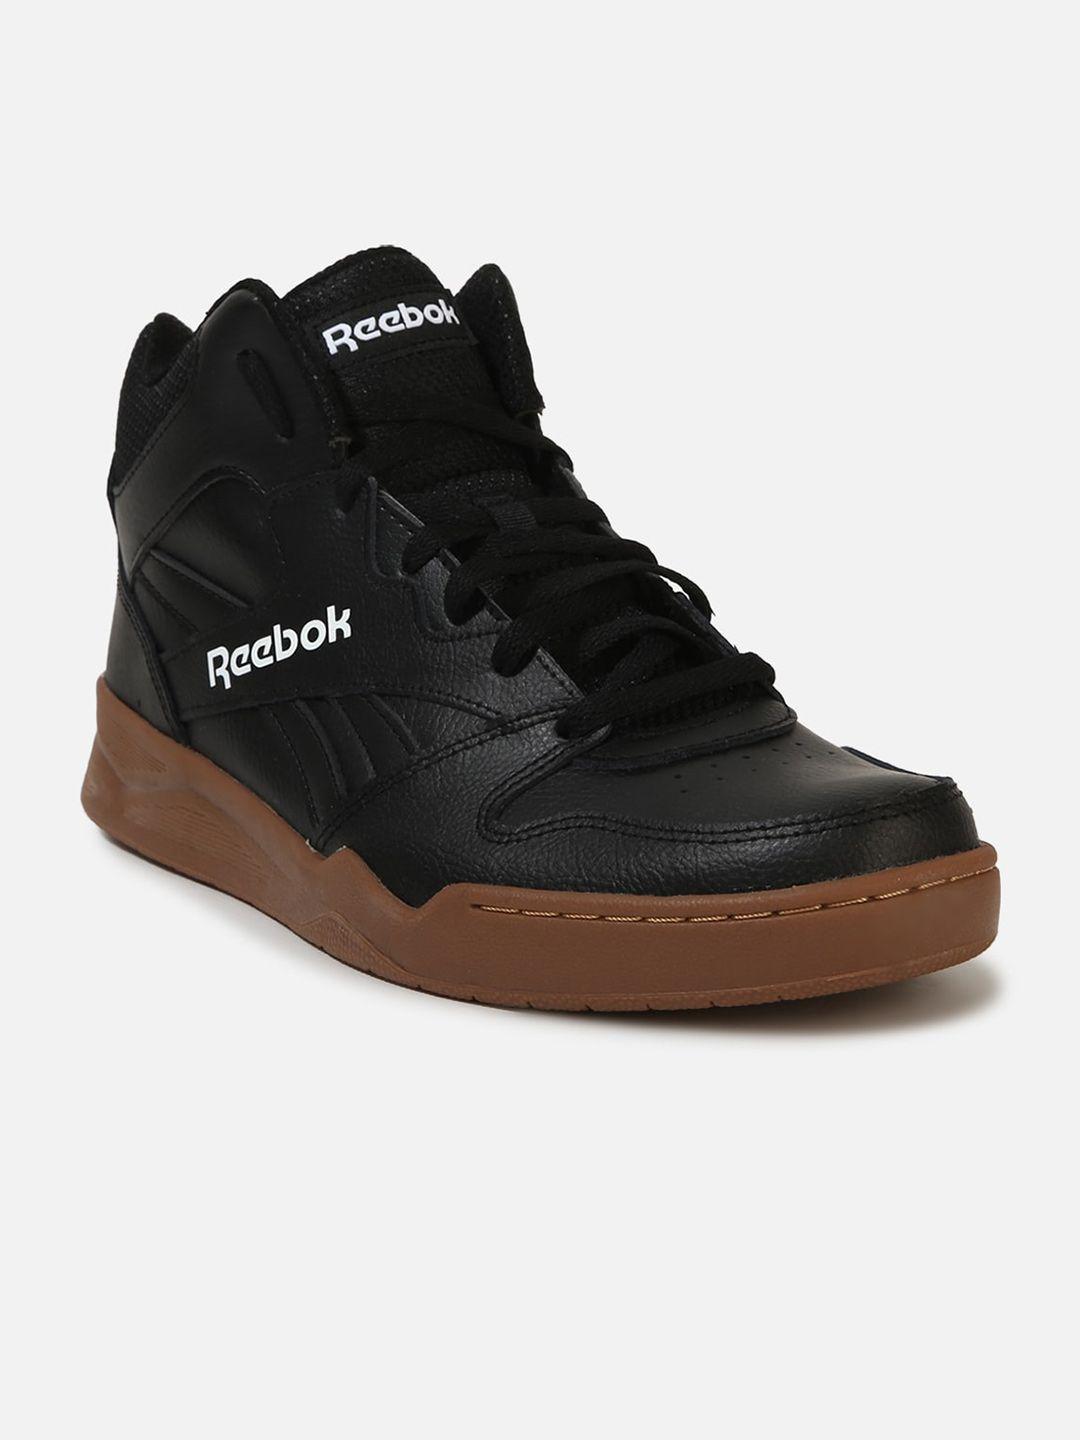 reebok-mens-bb-4500-hi-2-running-sports-shoes